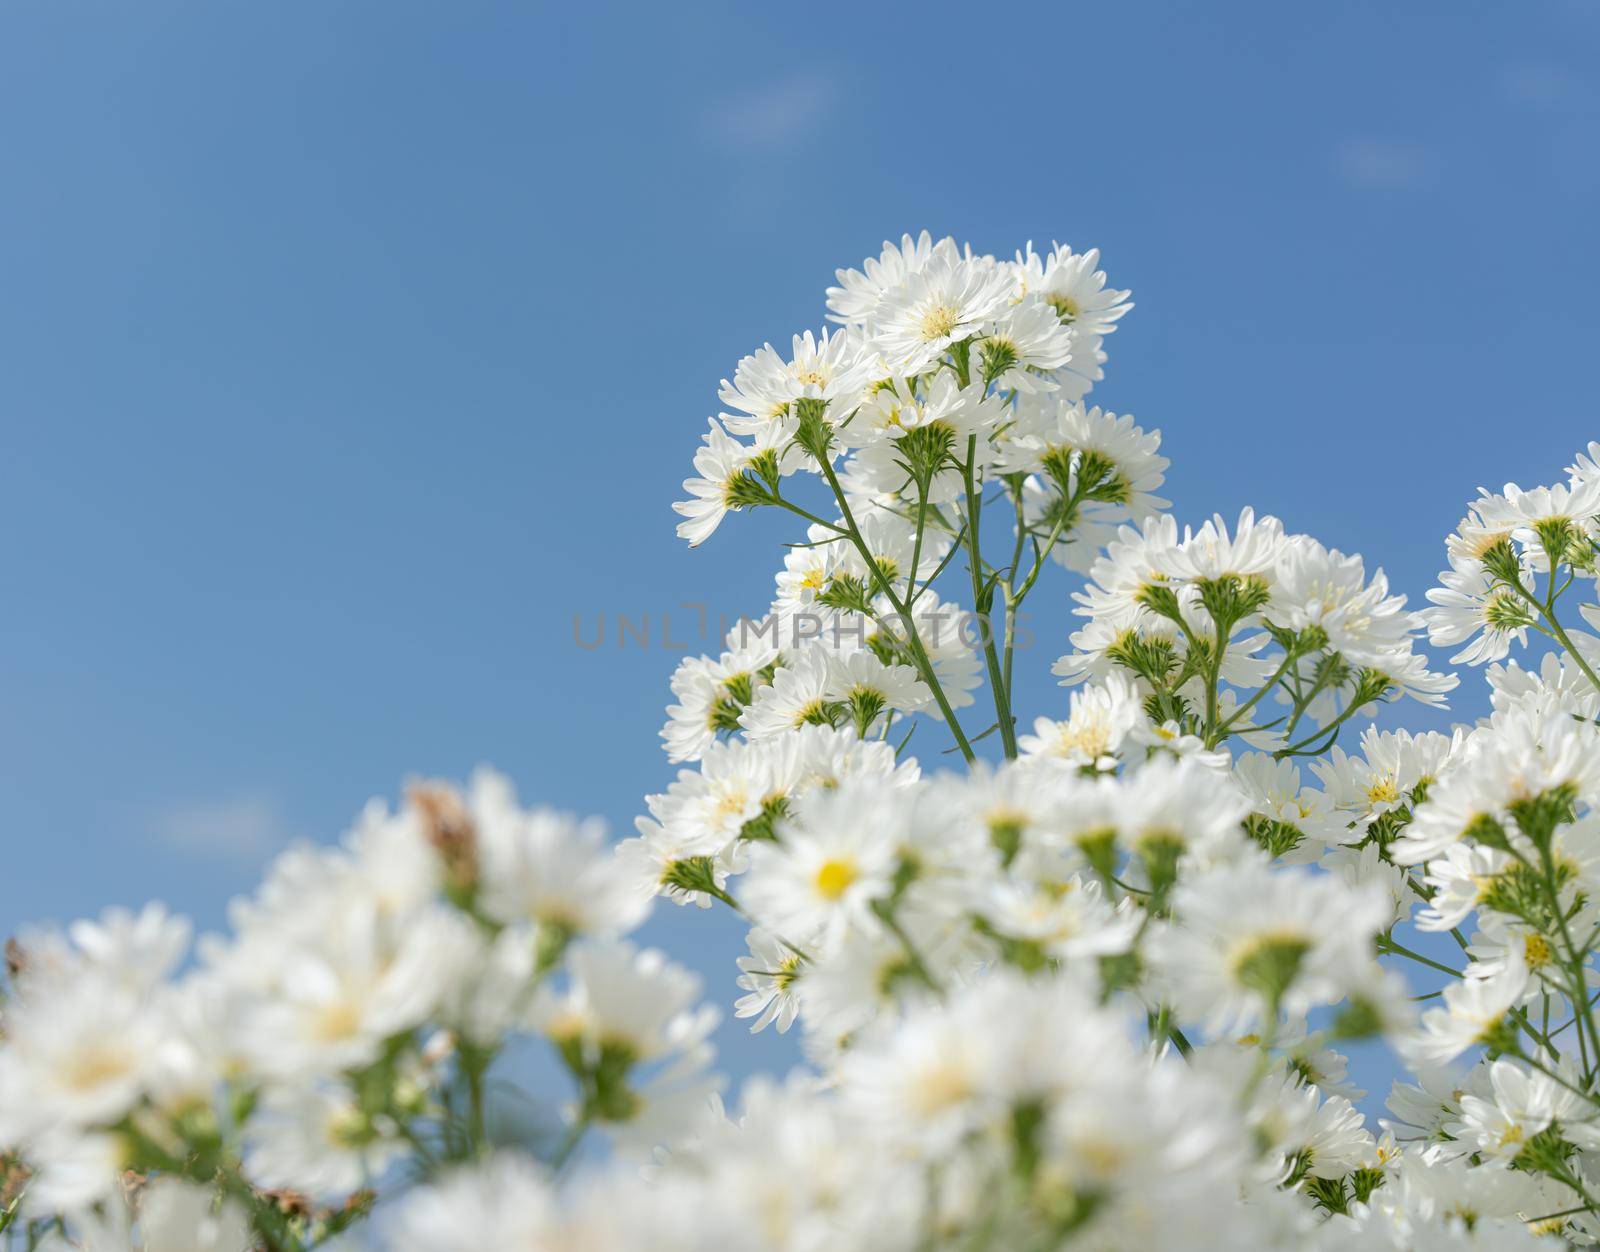 White flowers in garden on blue sky background